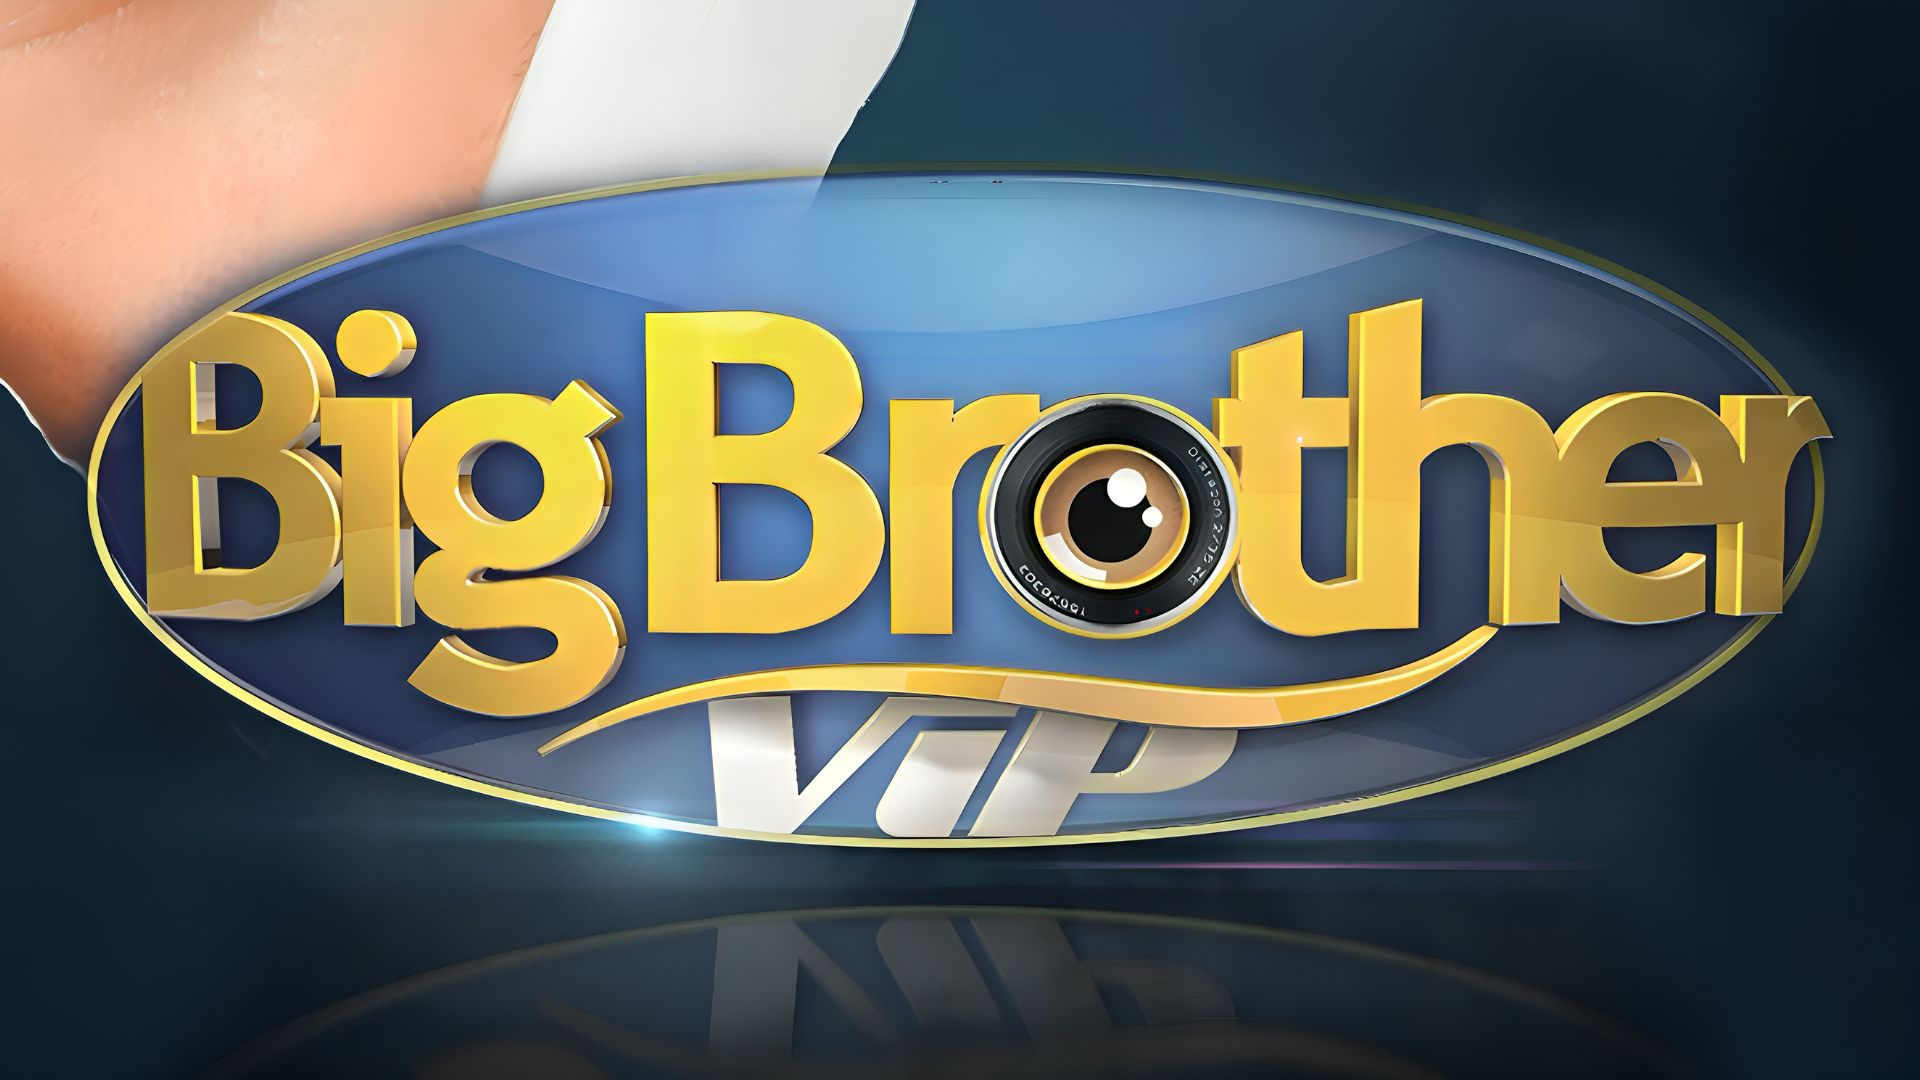 Big Brother Vip